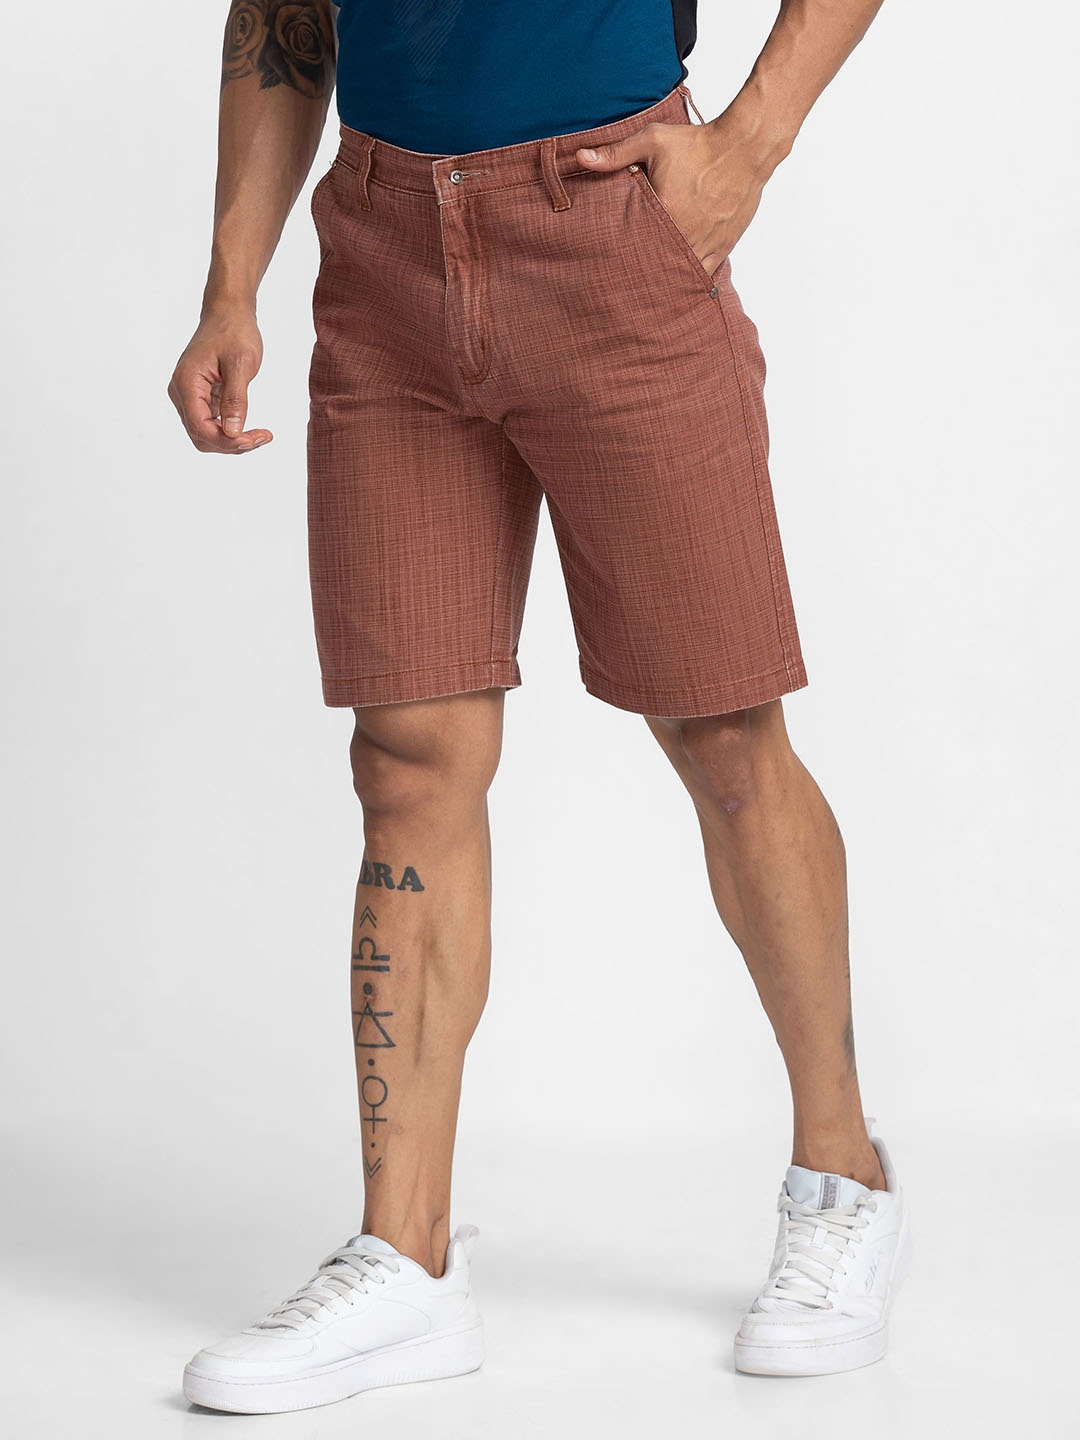 globus | Men's Brown Cotton Solid Shorts 3